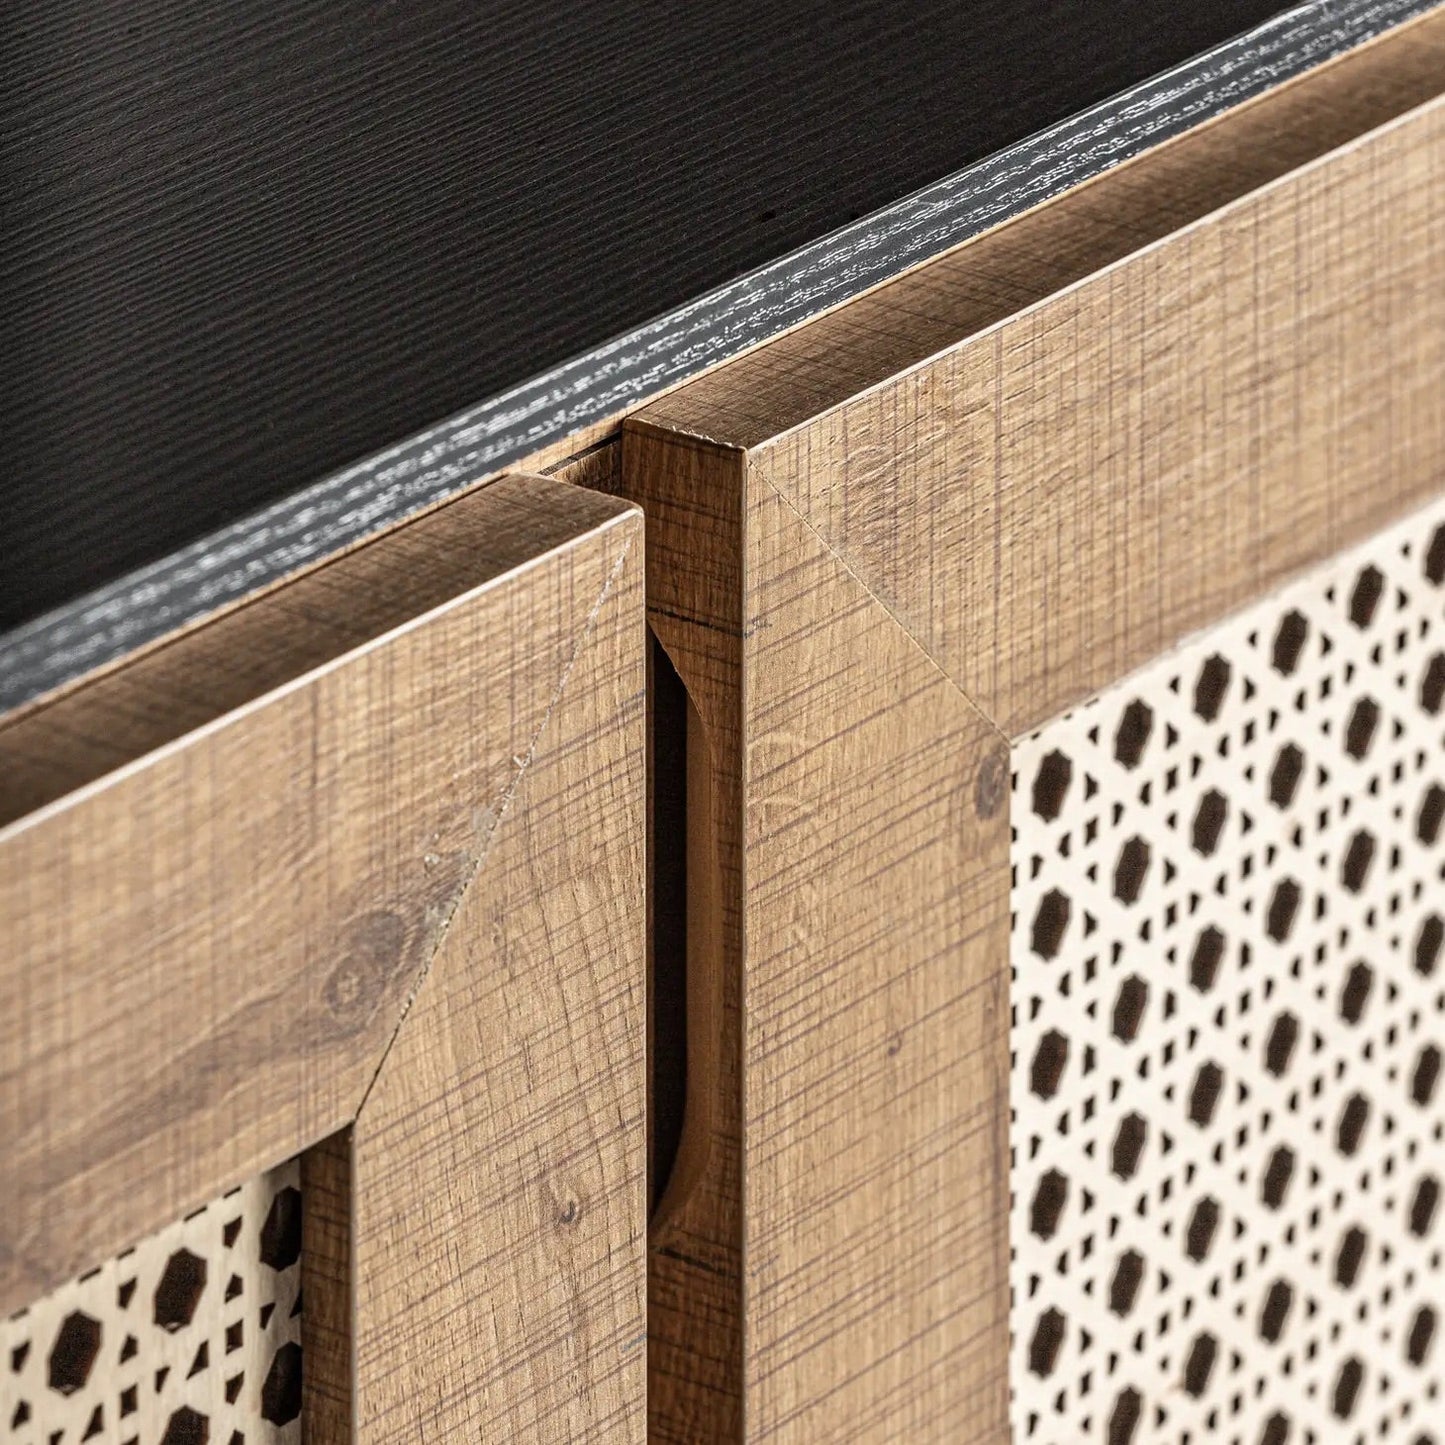 Duane Rattan + Black Wood Storage Cabinet/Console Cane Natural Woven Media Credenza Drawer Shelves